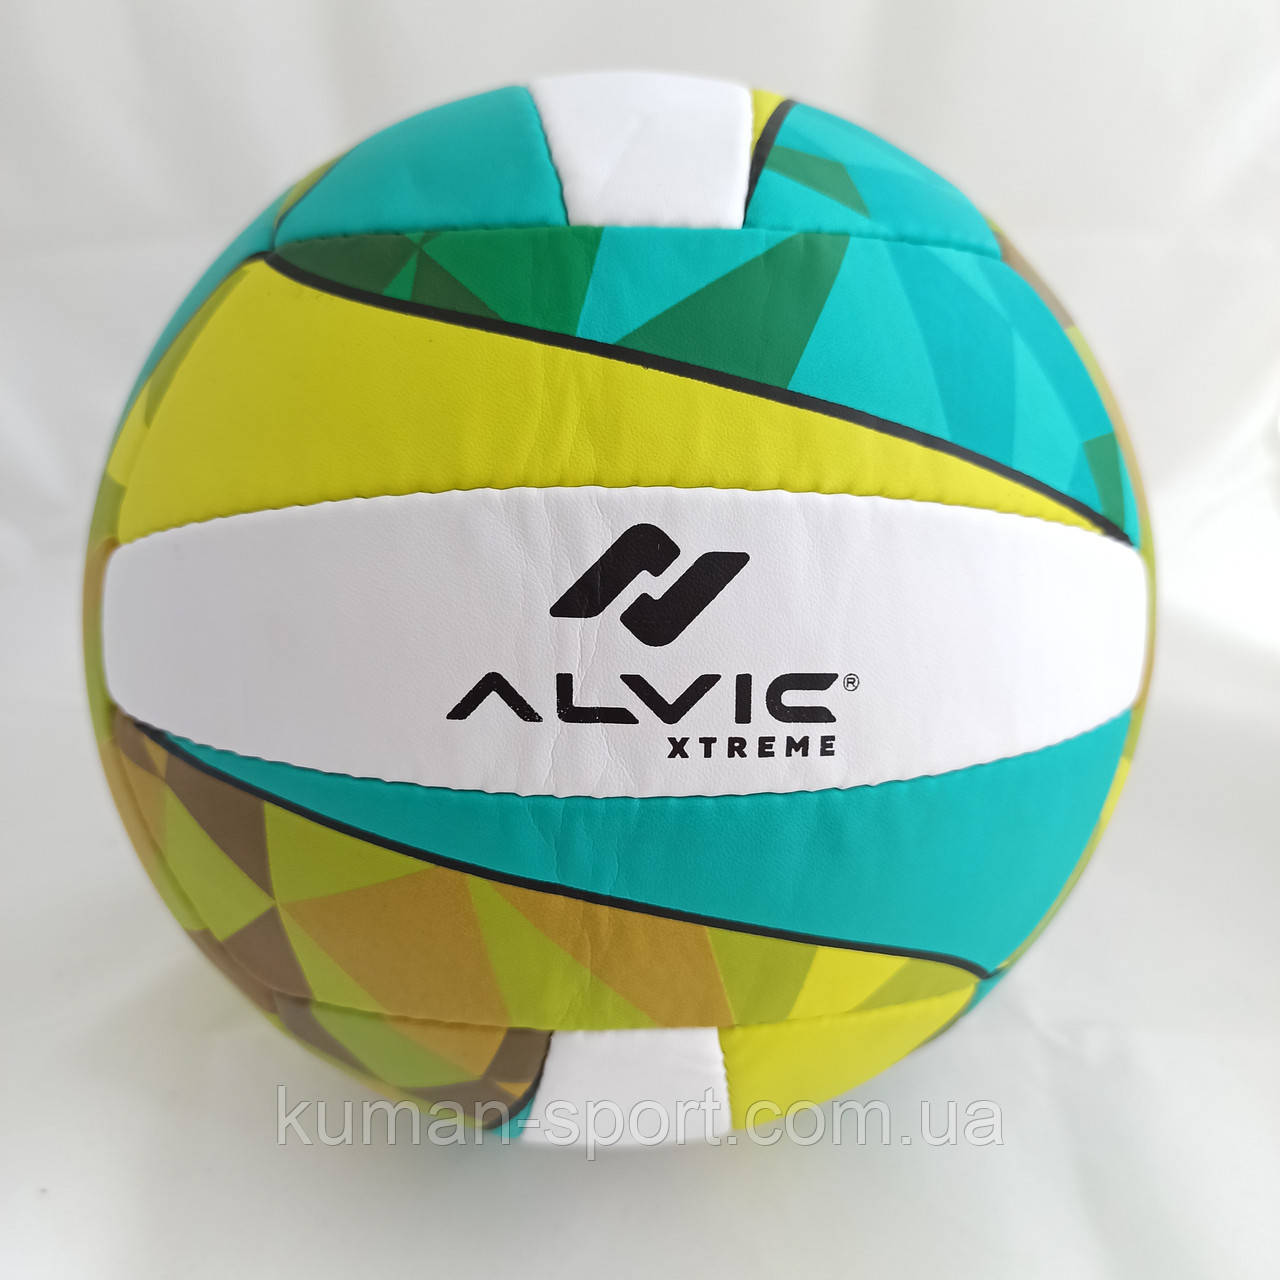 М'яч волейбольний ALVIC EXTREME